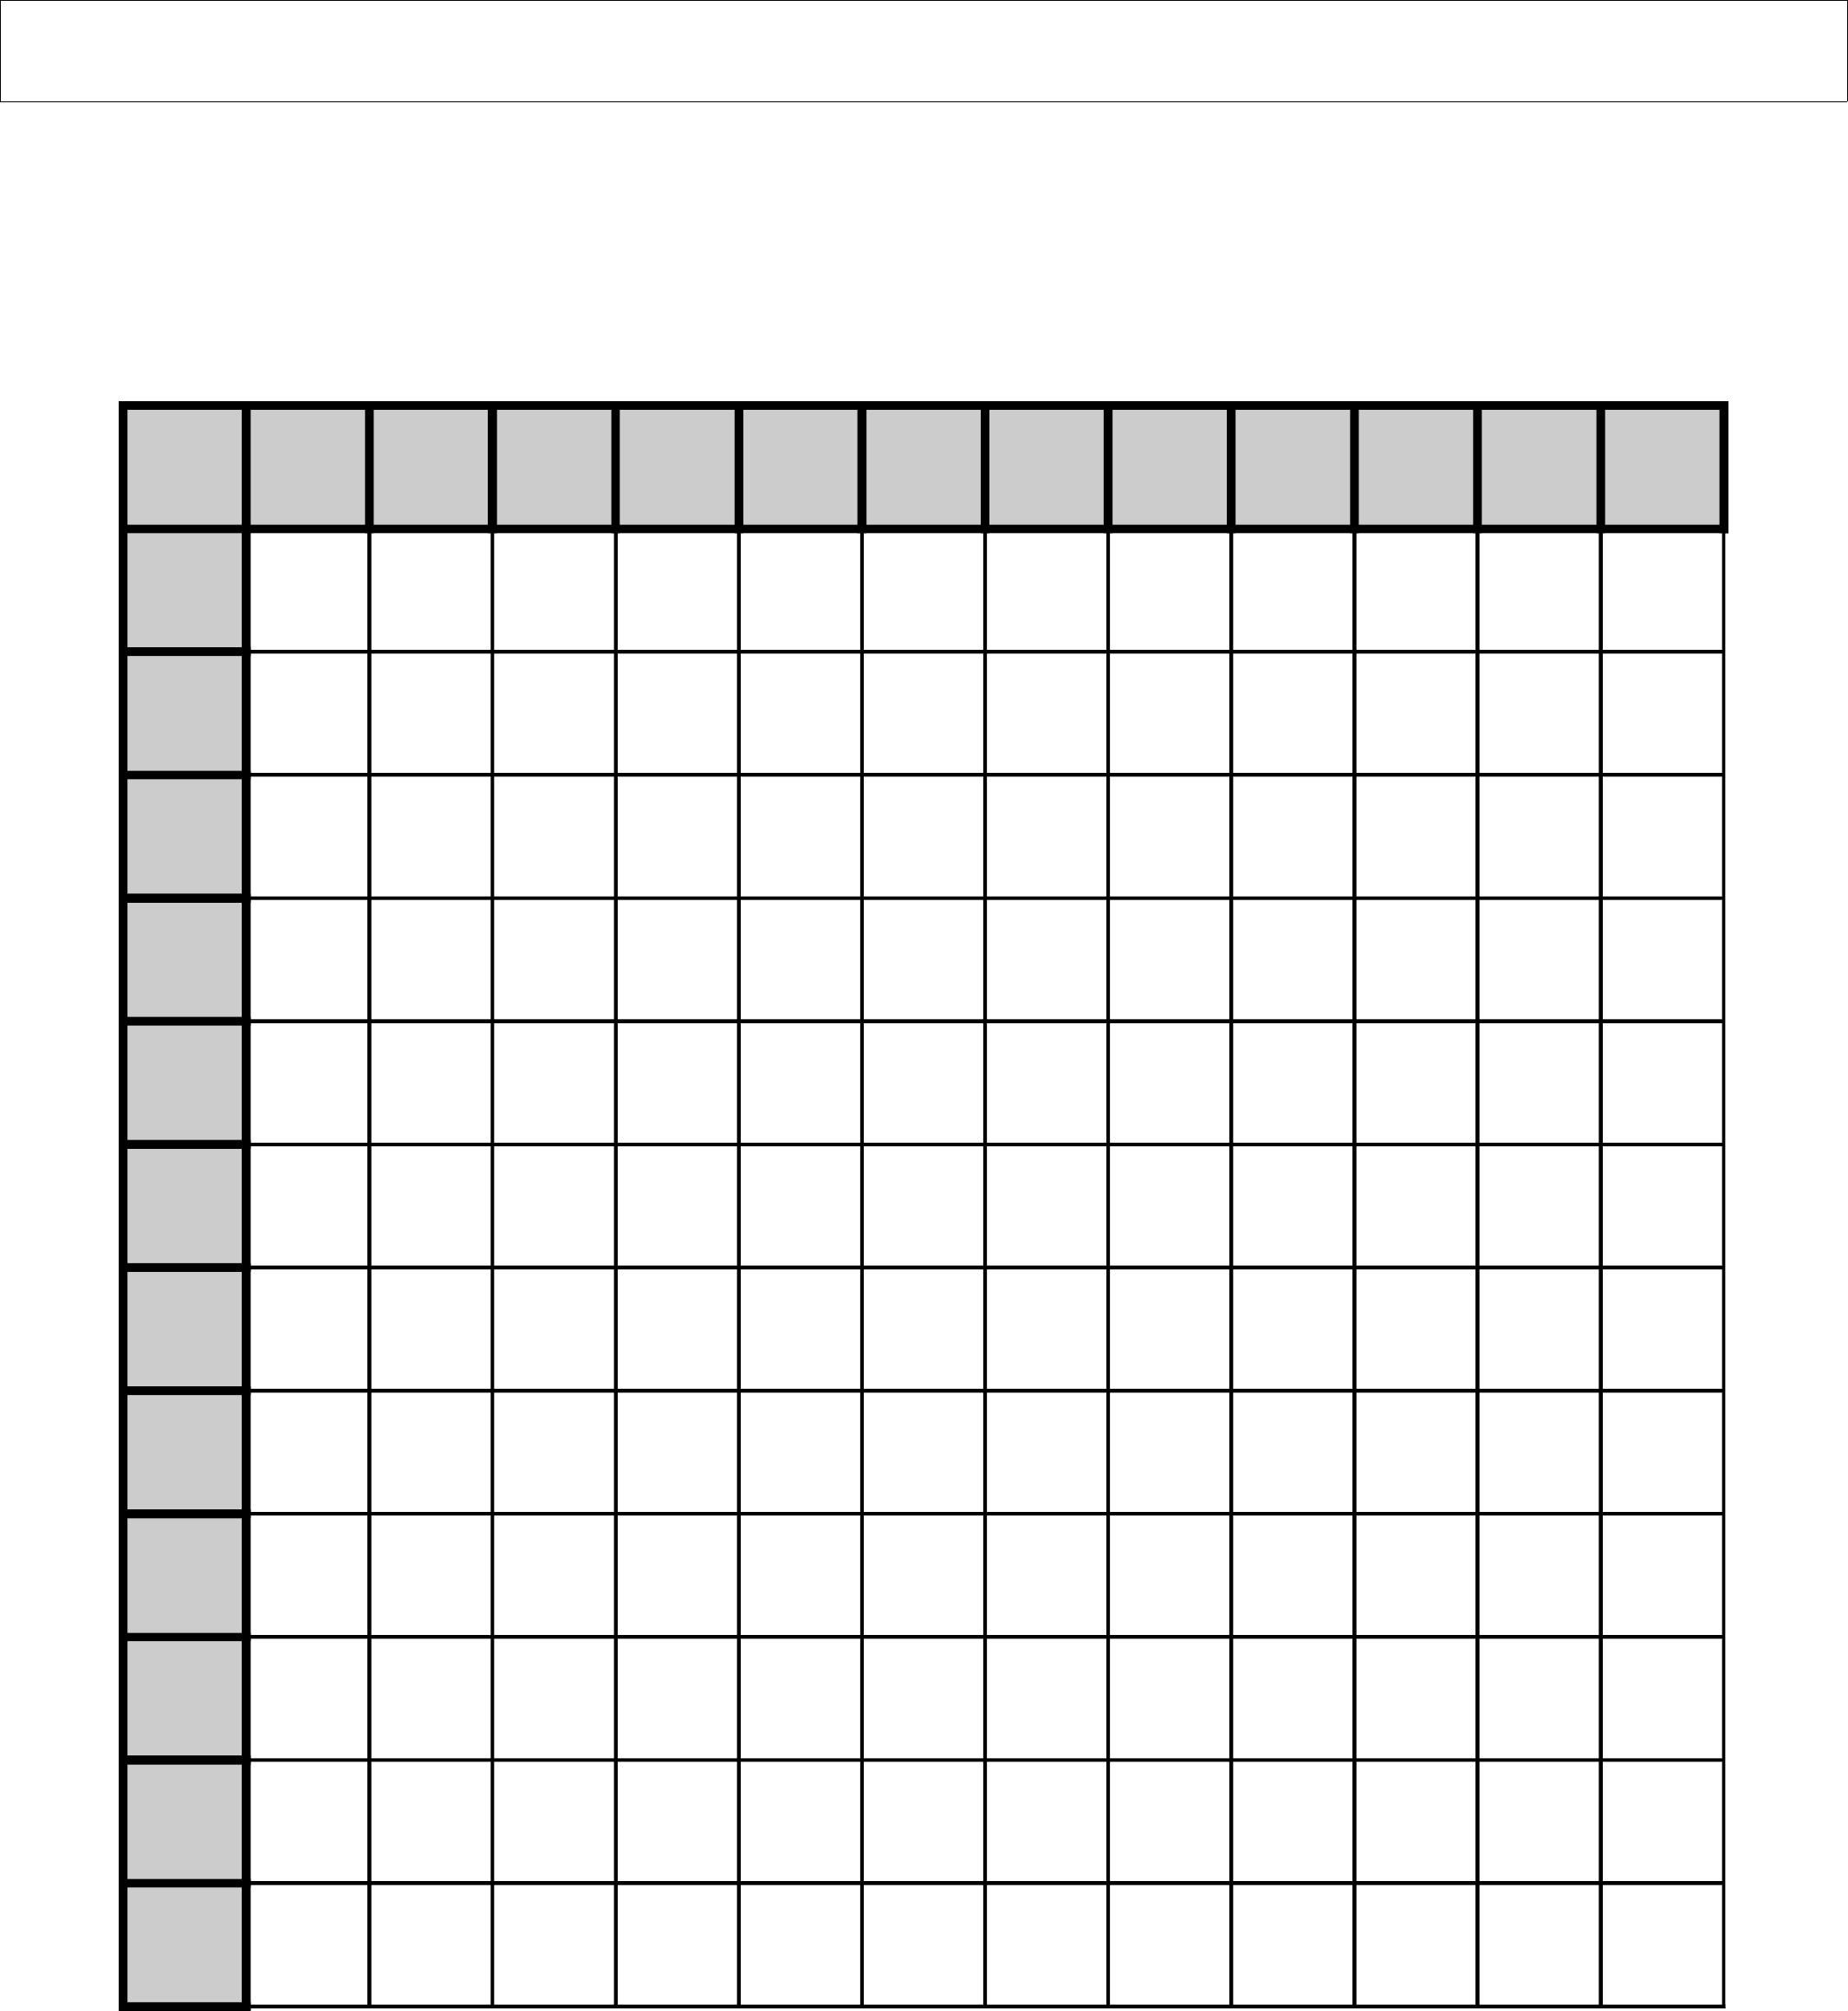 Multiplication Chart Empty Pdf Printable Blank